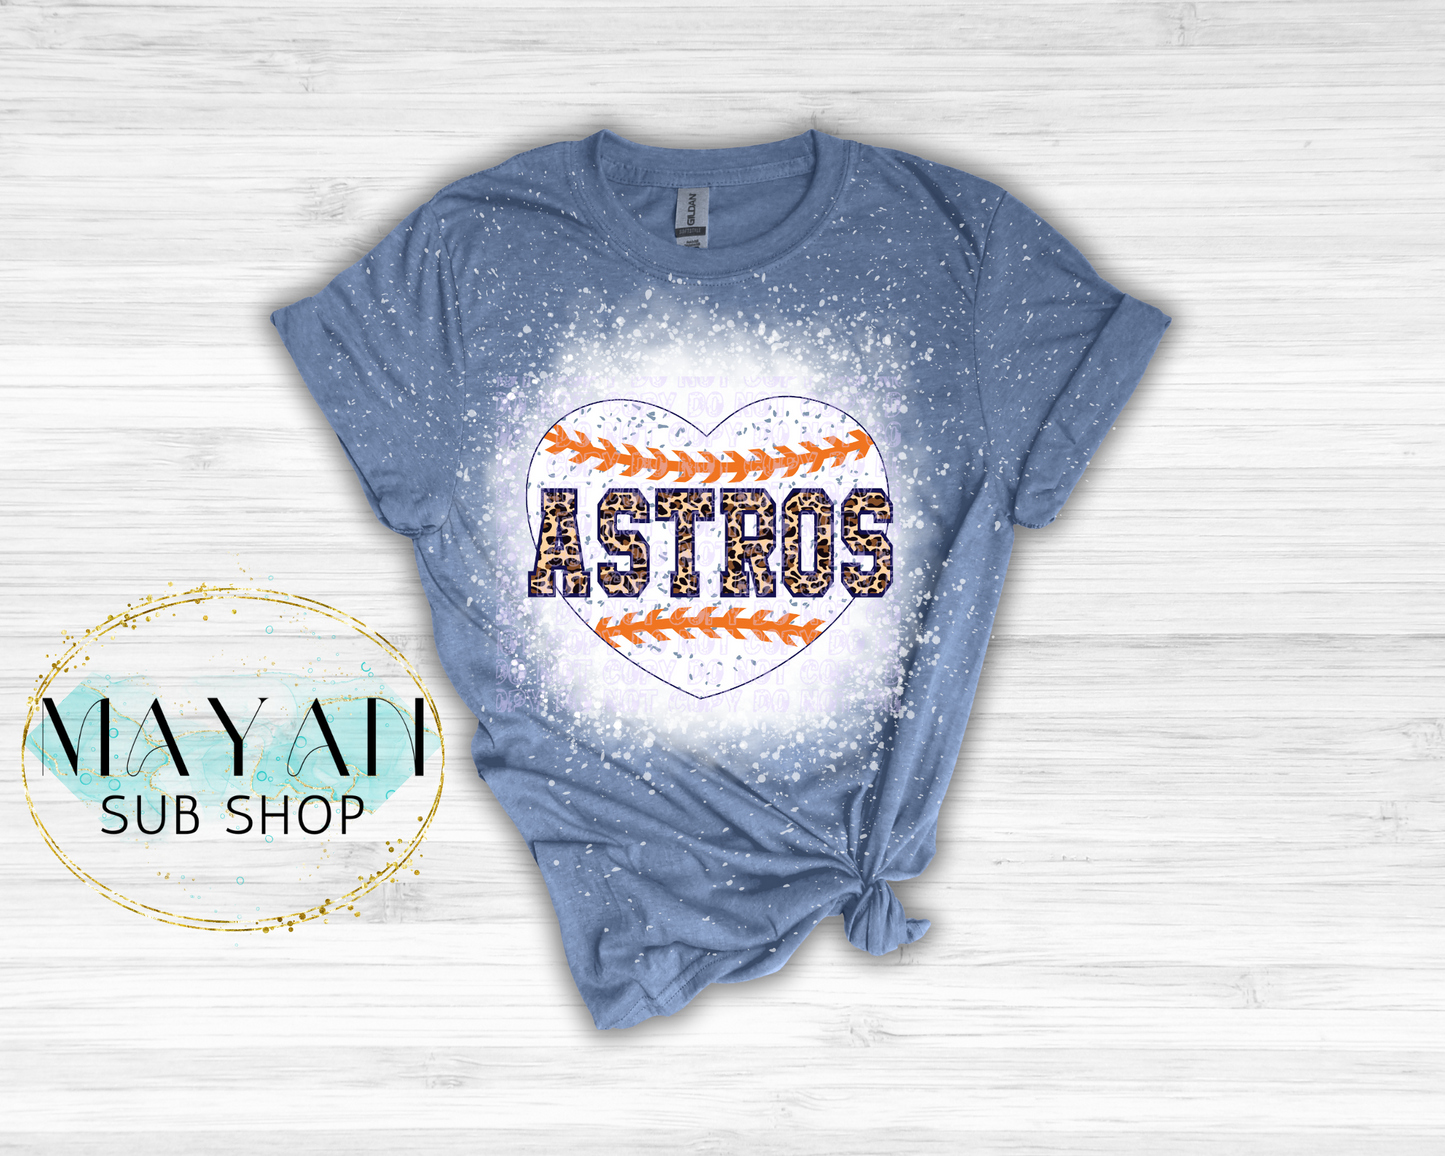 Astros Baseball Heart Bleached Shirt - Mayan Sub Shop